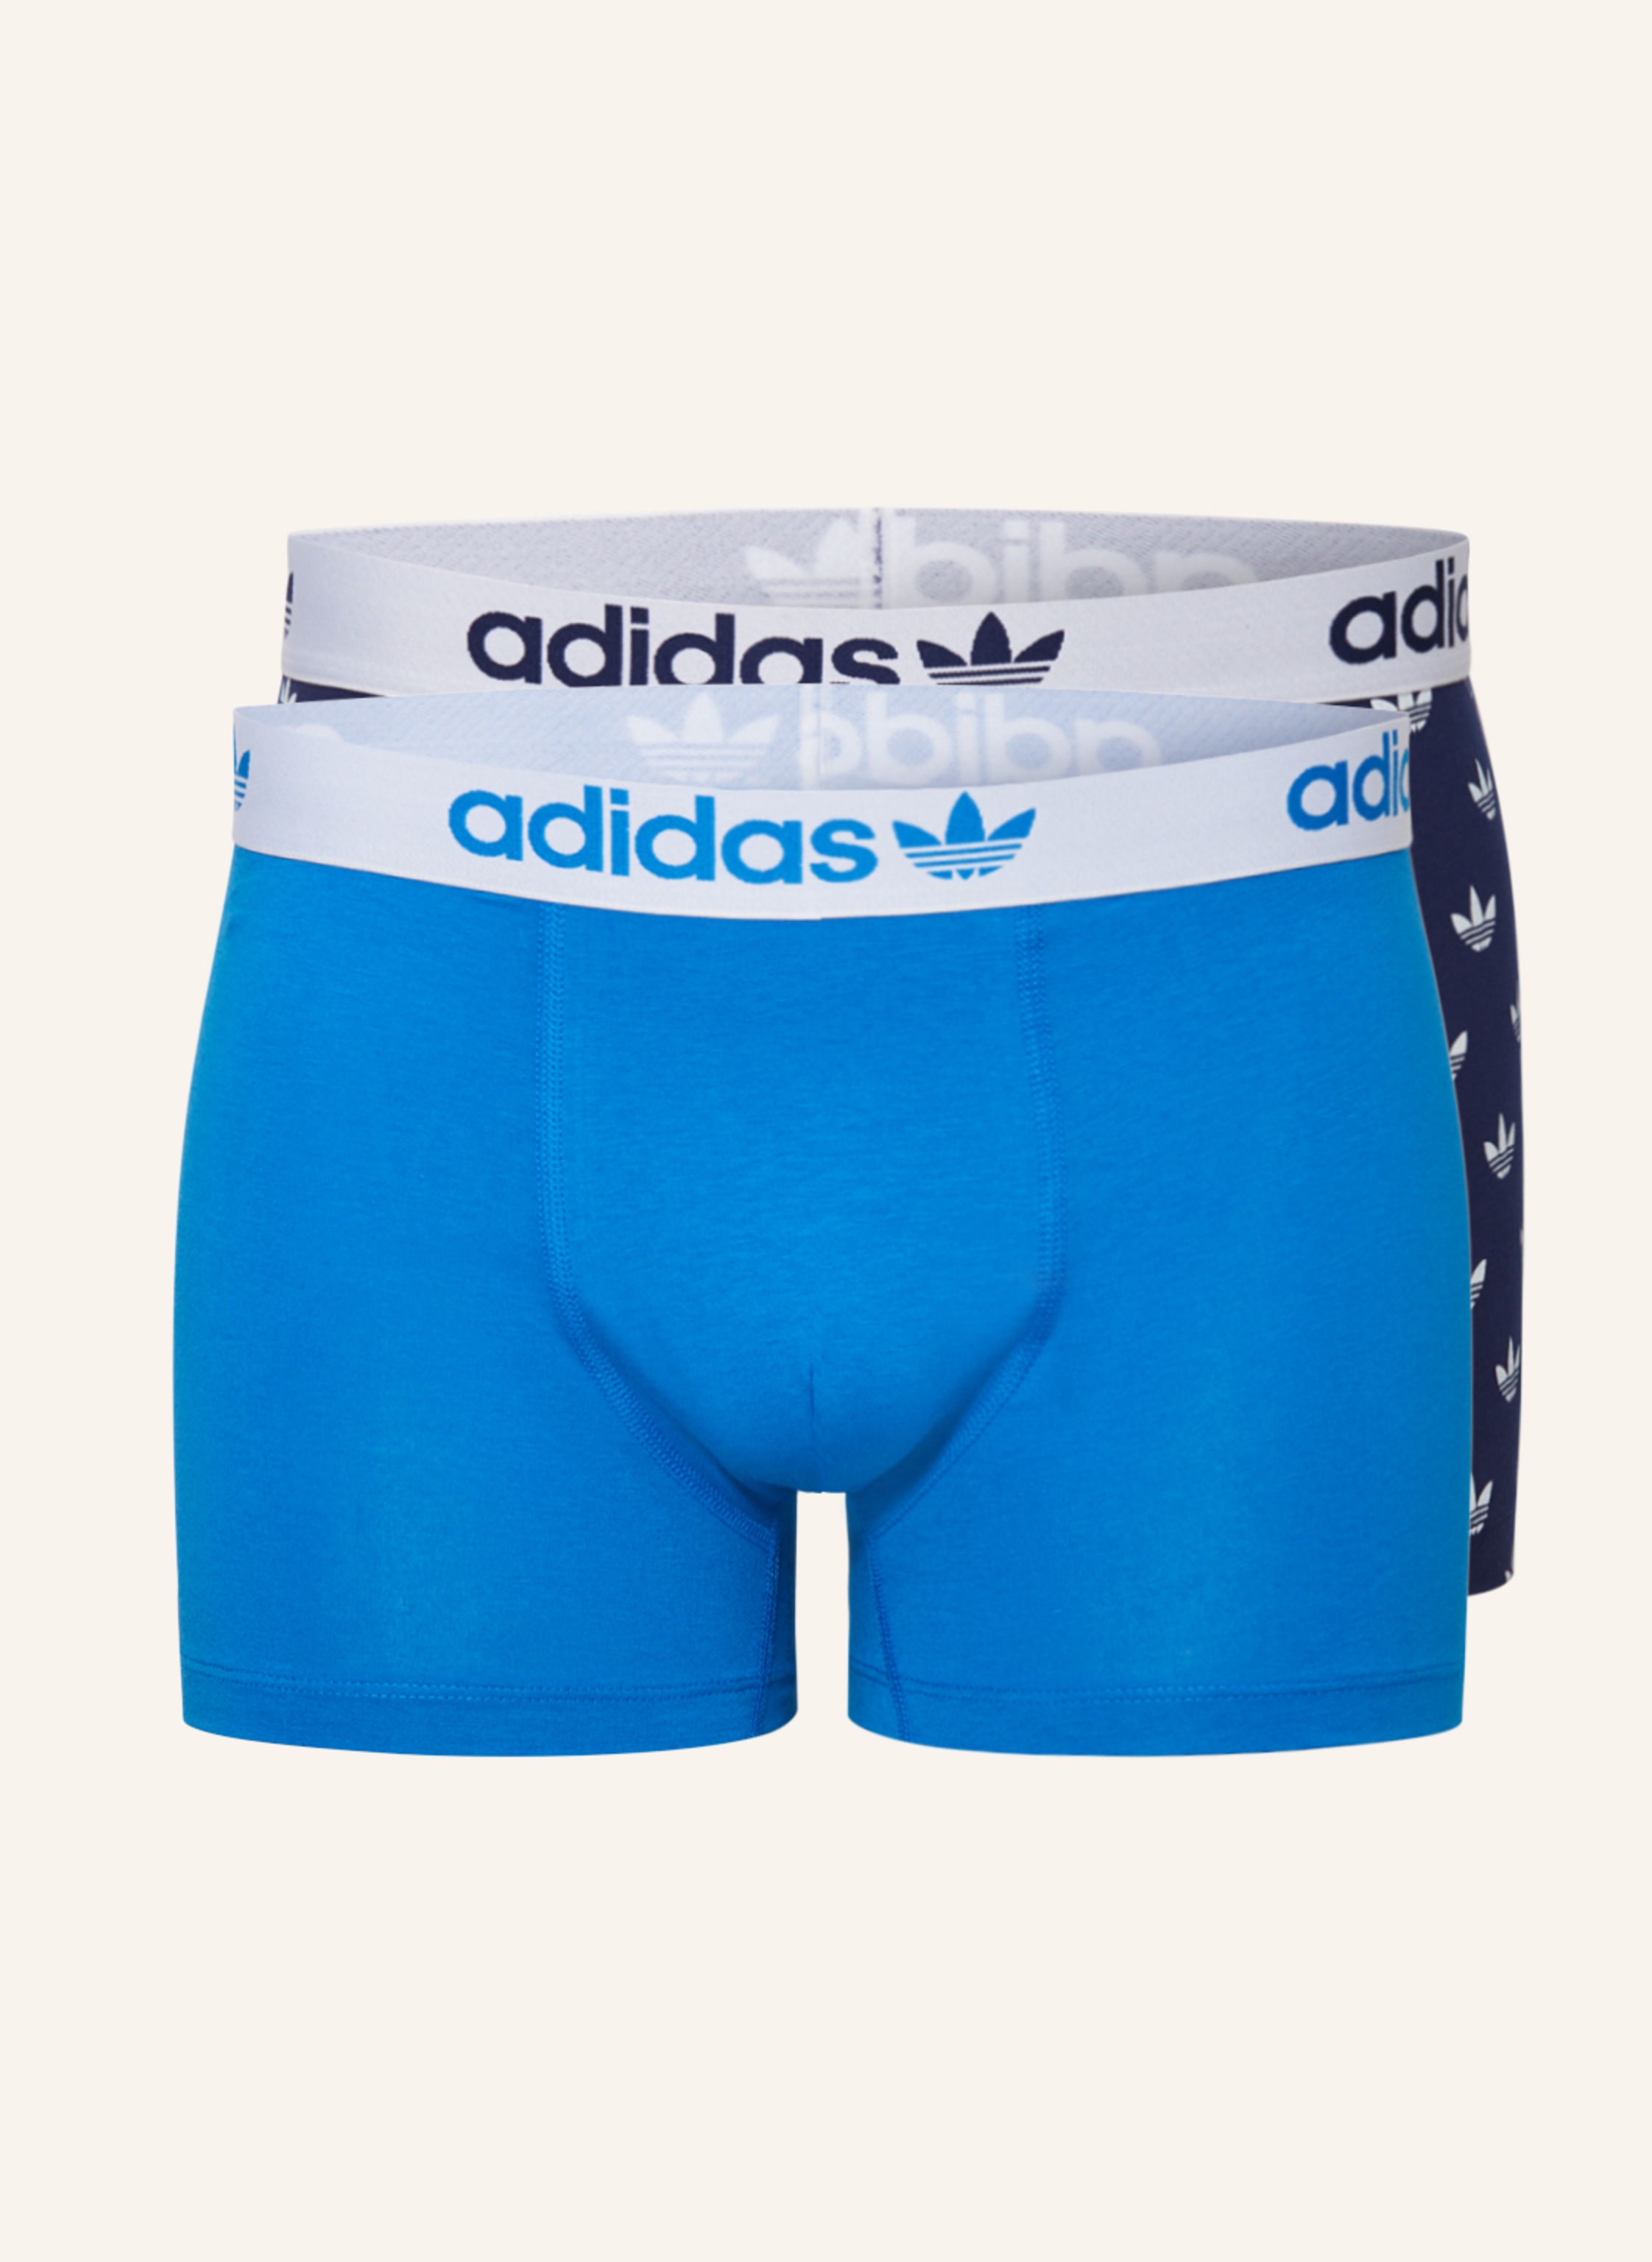 adidas Boxershorts Originals dunkelblau/ 2er-Pack weiss in blau/